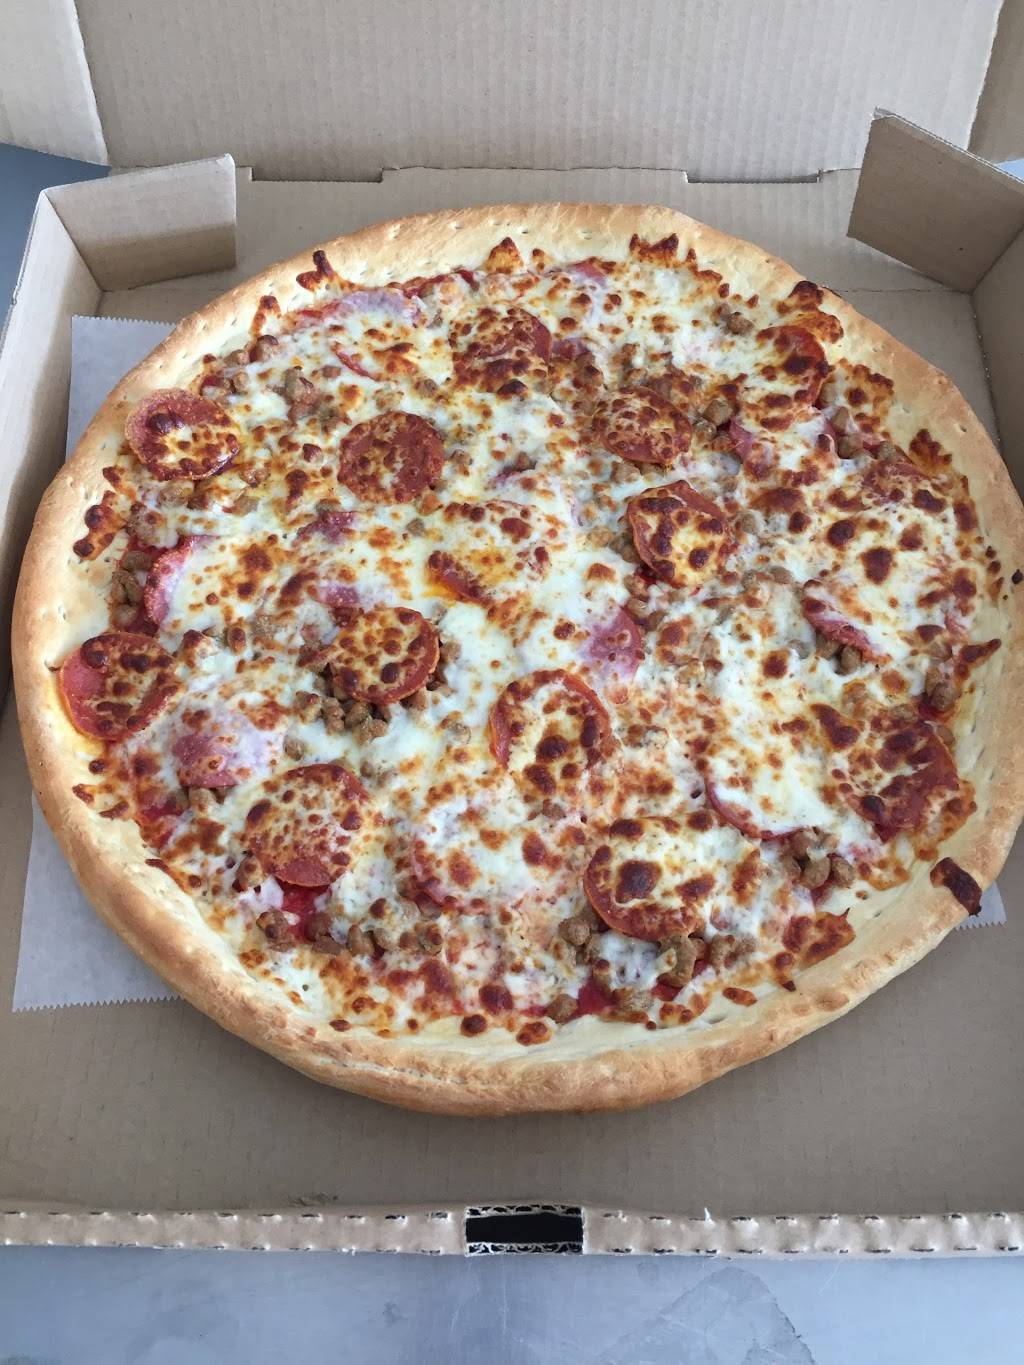 Red & Blues Pizza | 4500 S May Ave ste c, Oklahoma City, OK 73119, USA | Phone: (405) 602-2838